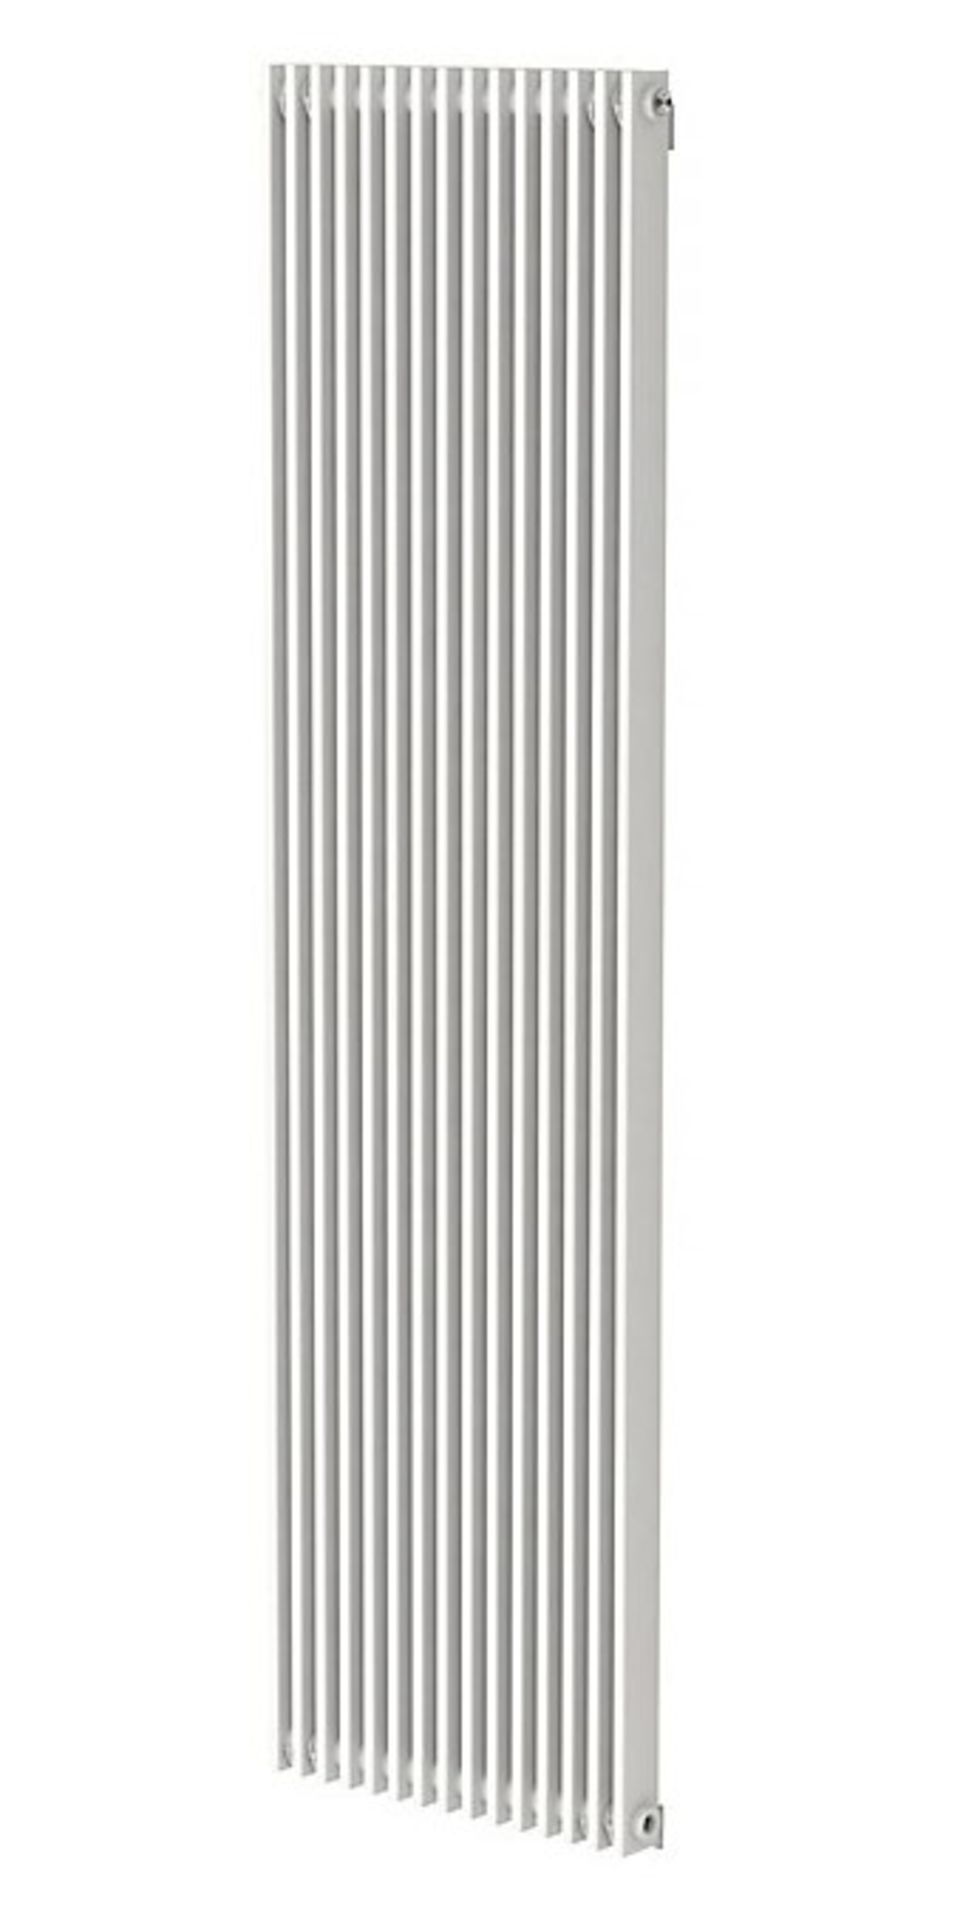 (PC147)1800 x 500mm Kensal Vertical Designer Radiator White Painted. The Kensal designer radiat...( - Image 2 of 2